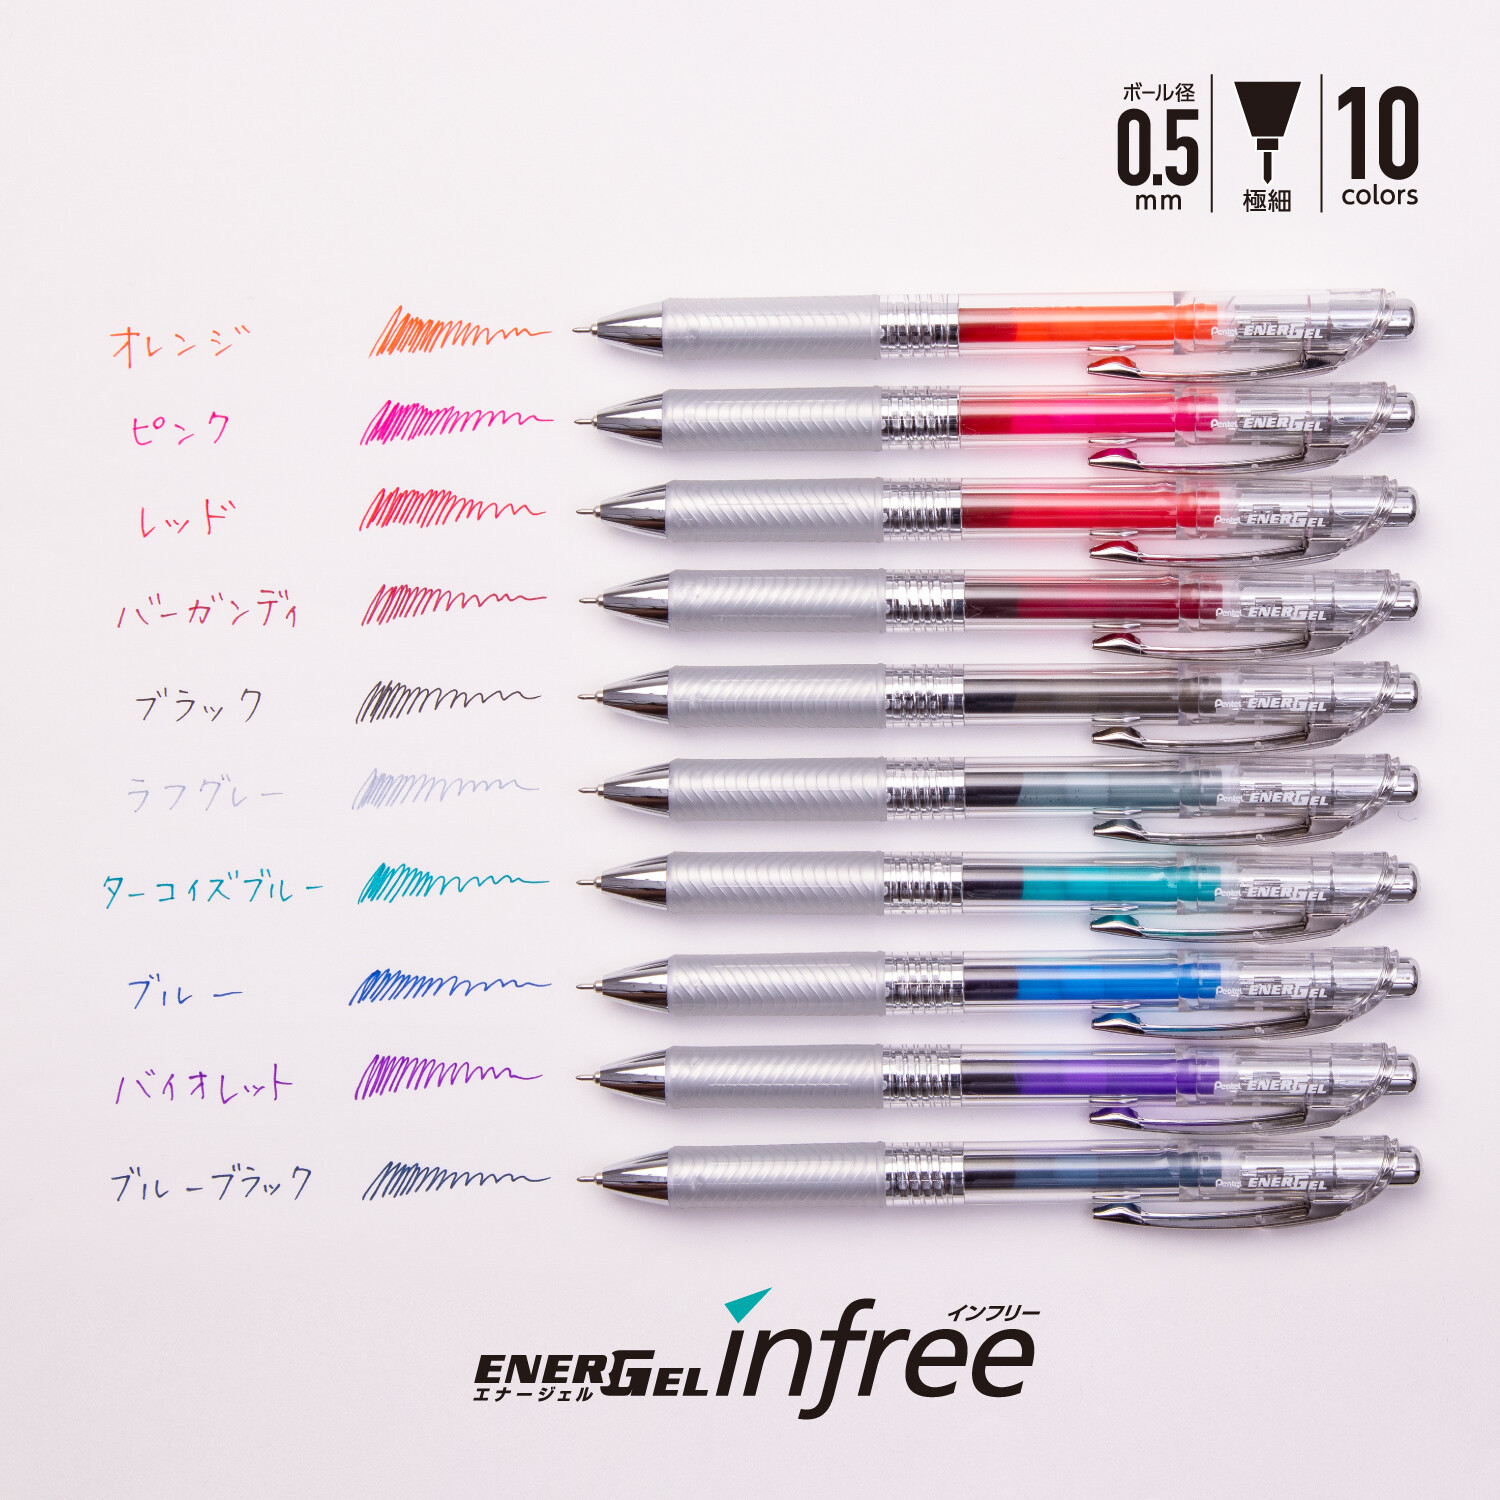 Pentel EnerGel Infree 0.5mm Gel Pen 10 color set - j-okini - Products from  Japan